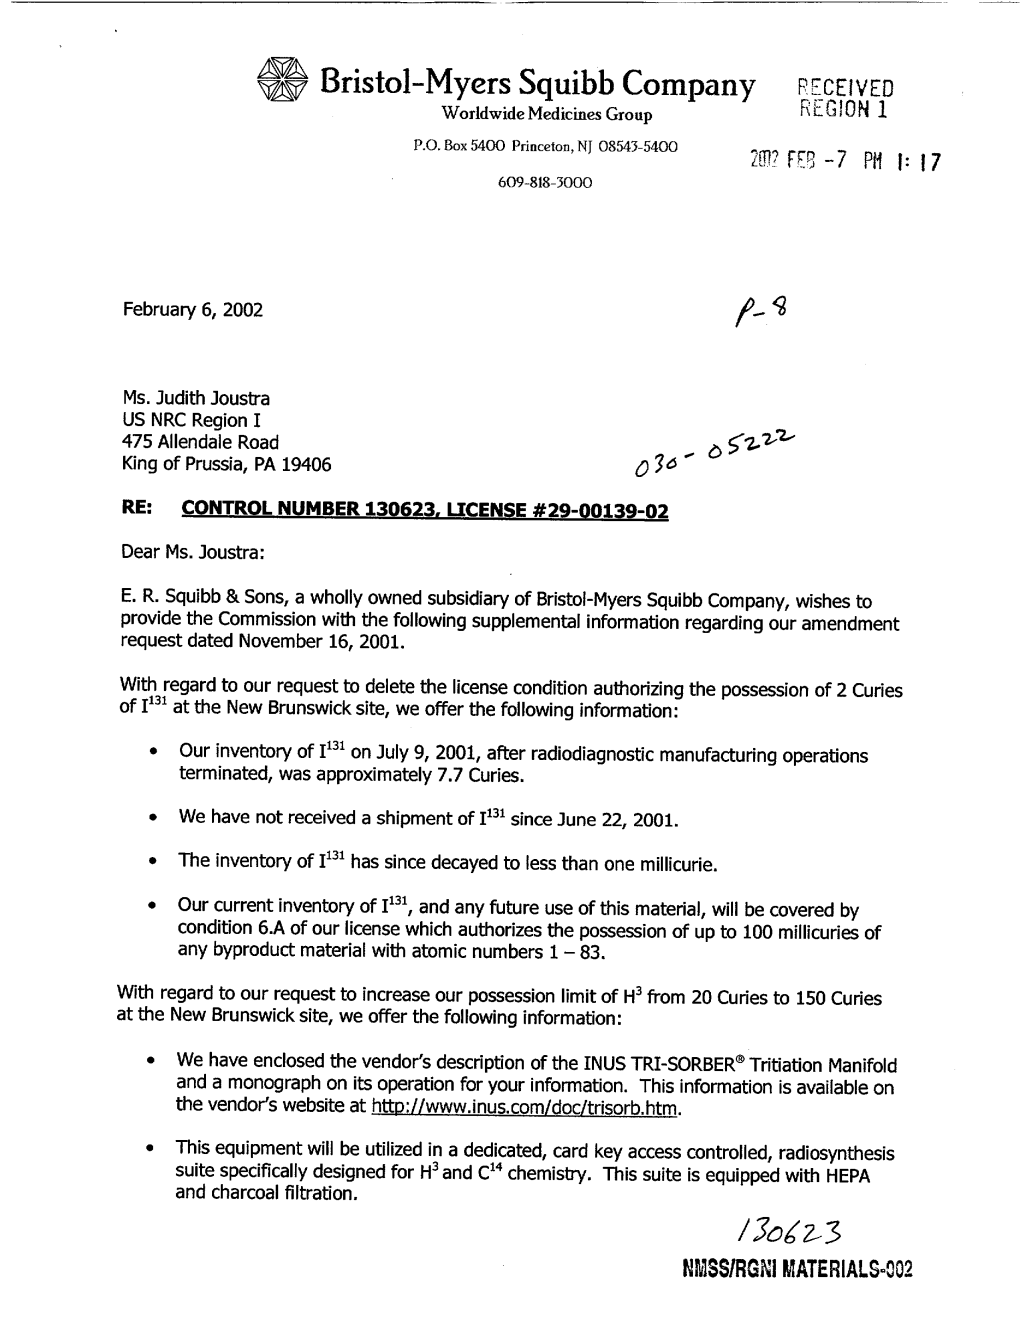 E.R. Squibb & Sons, Inc., Supplemental Information Letter Dtd 02/06/2002